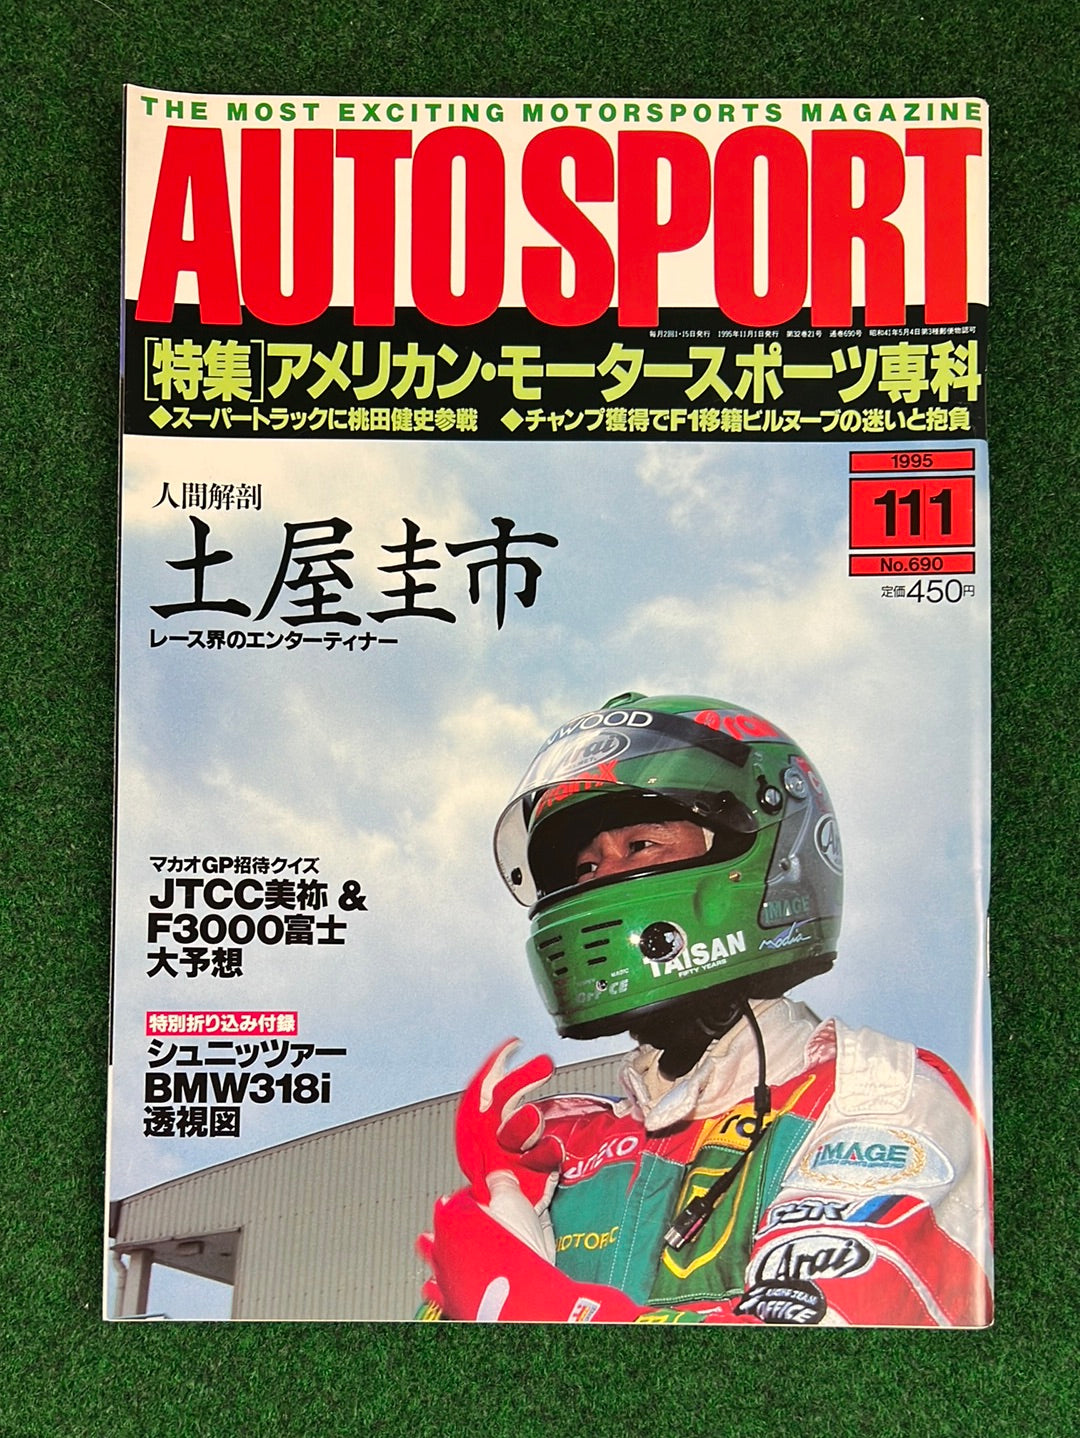 Auto Sport Magazine - 1995 Complete Set